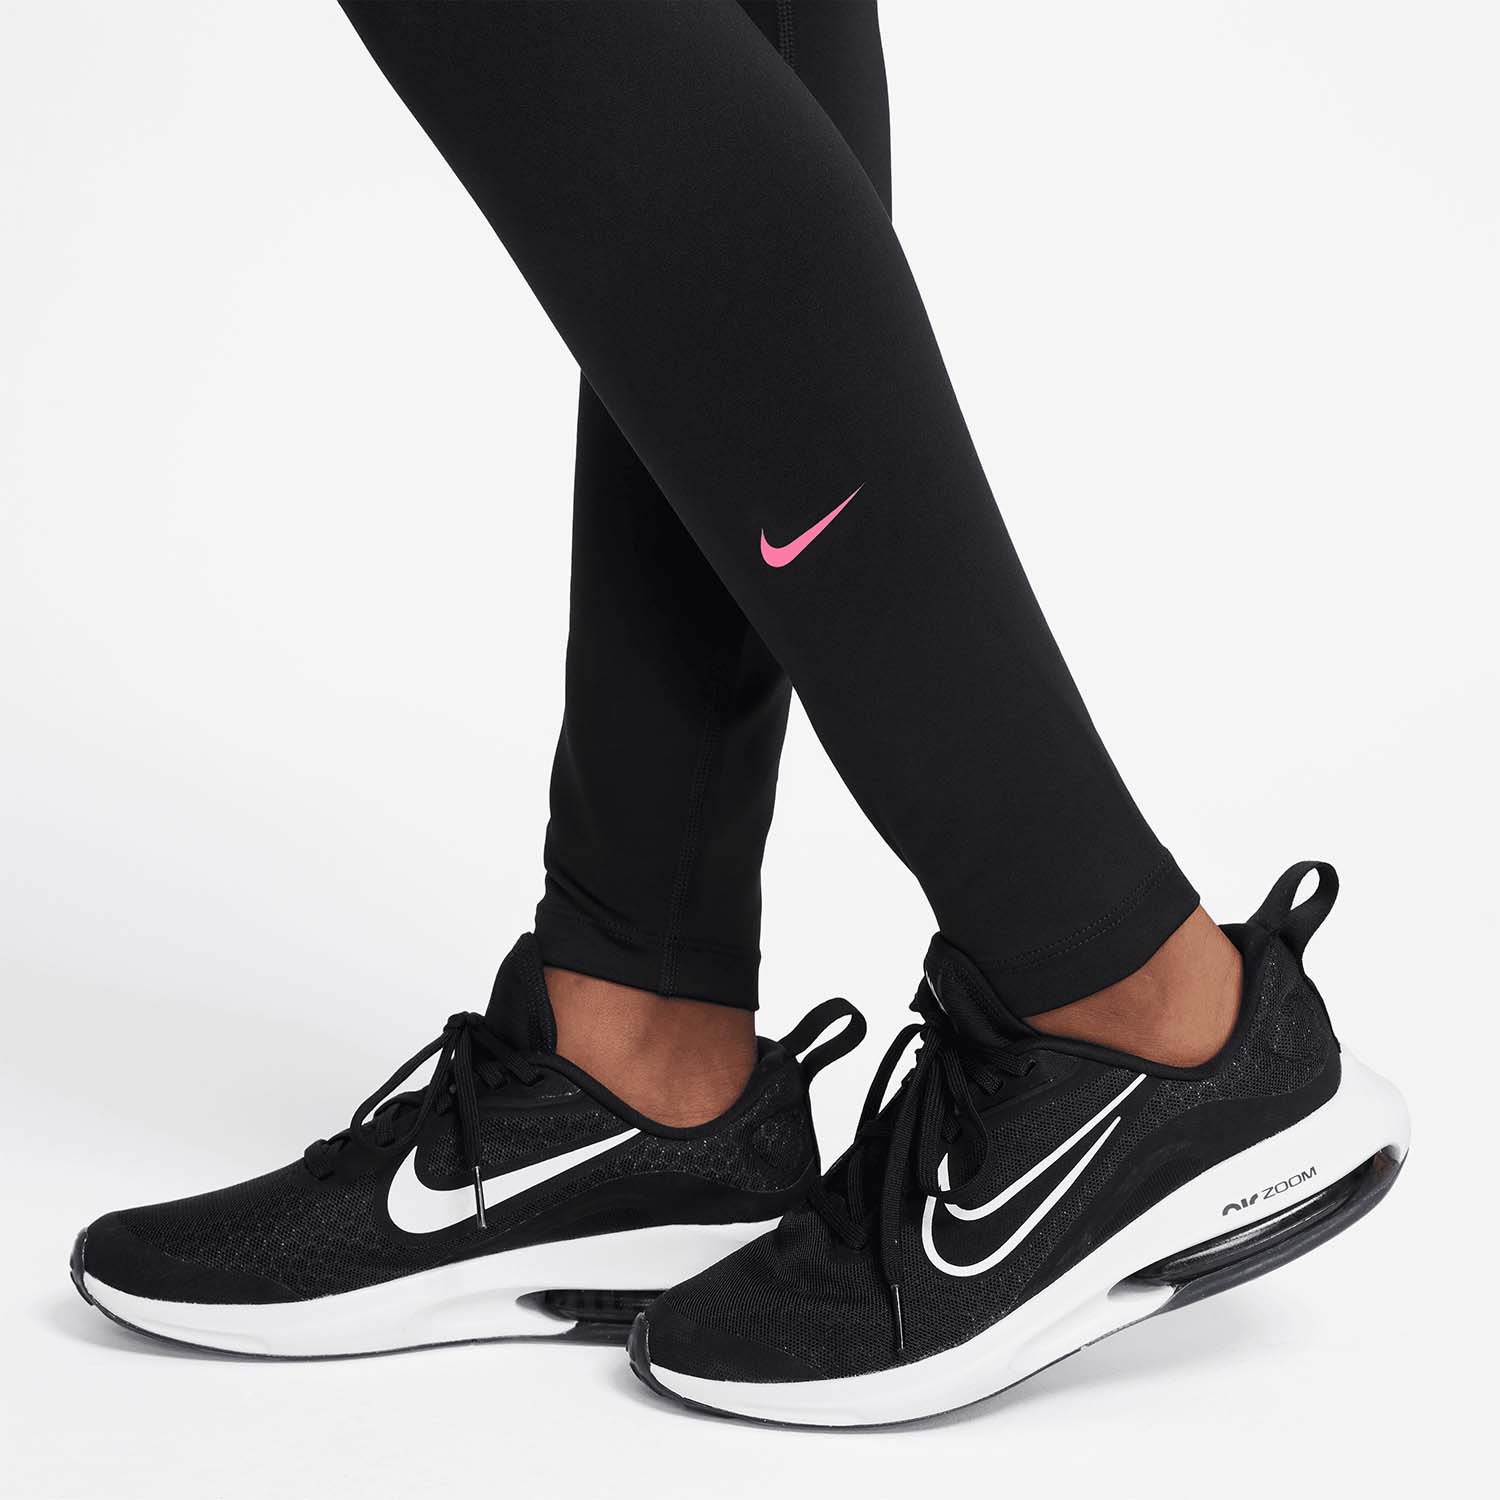 Nike Dri-FIT One Tights Girl - Black/Sunset Pulse